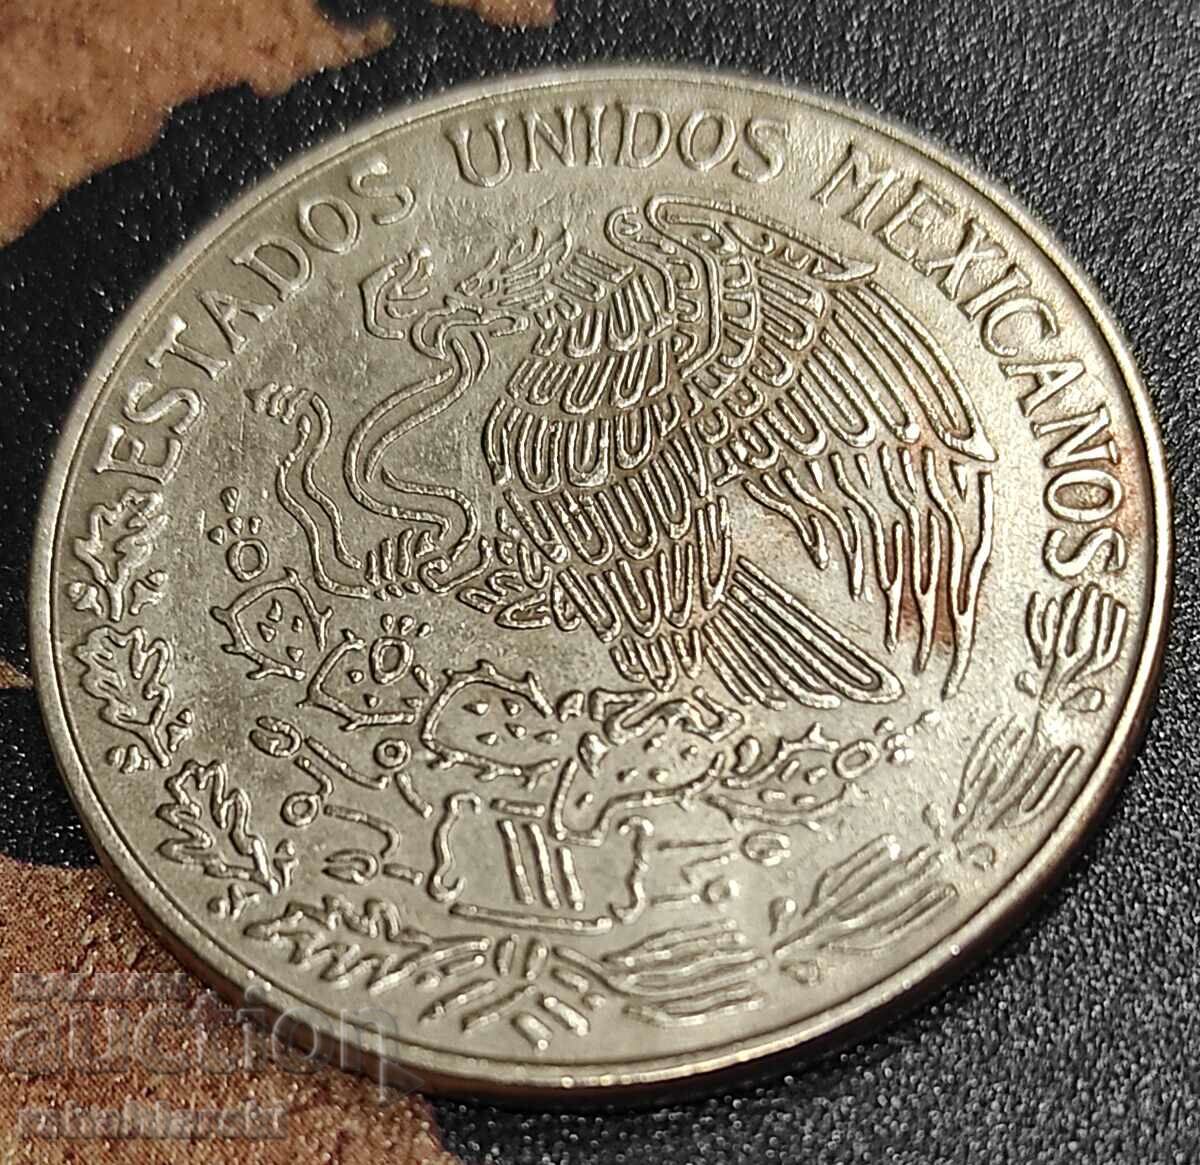 Монета Мексико 1 песо, 1975